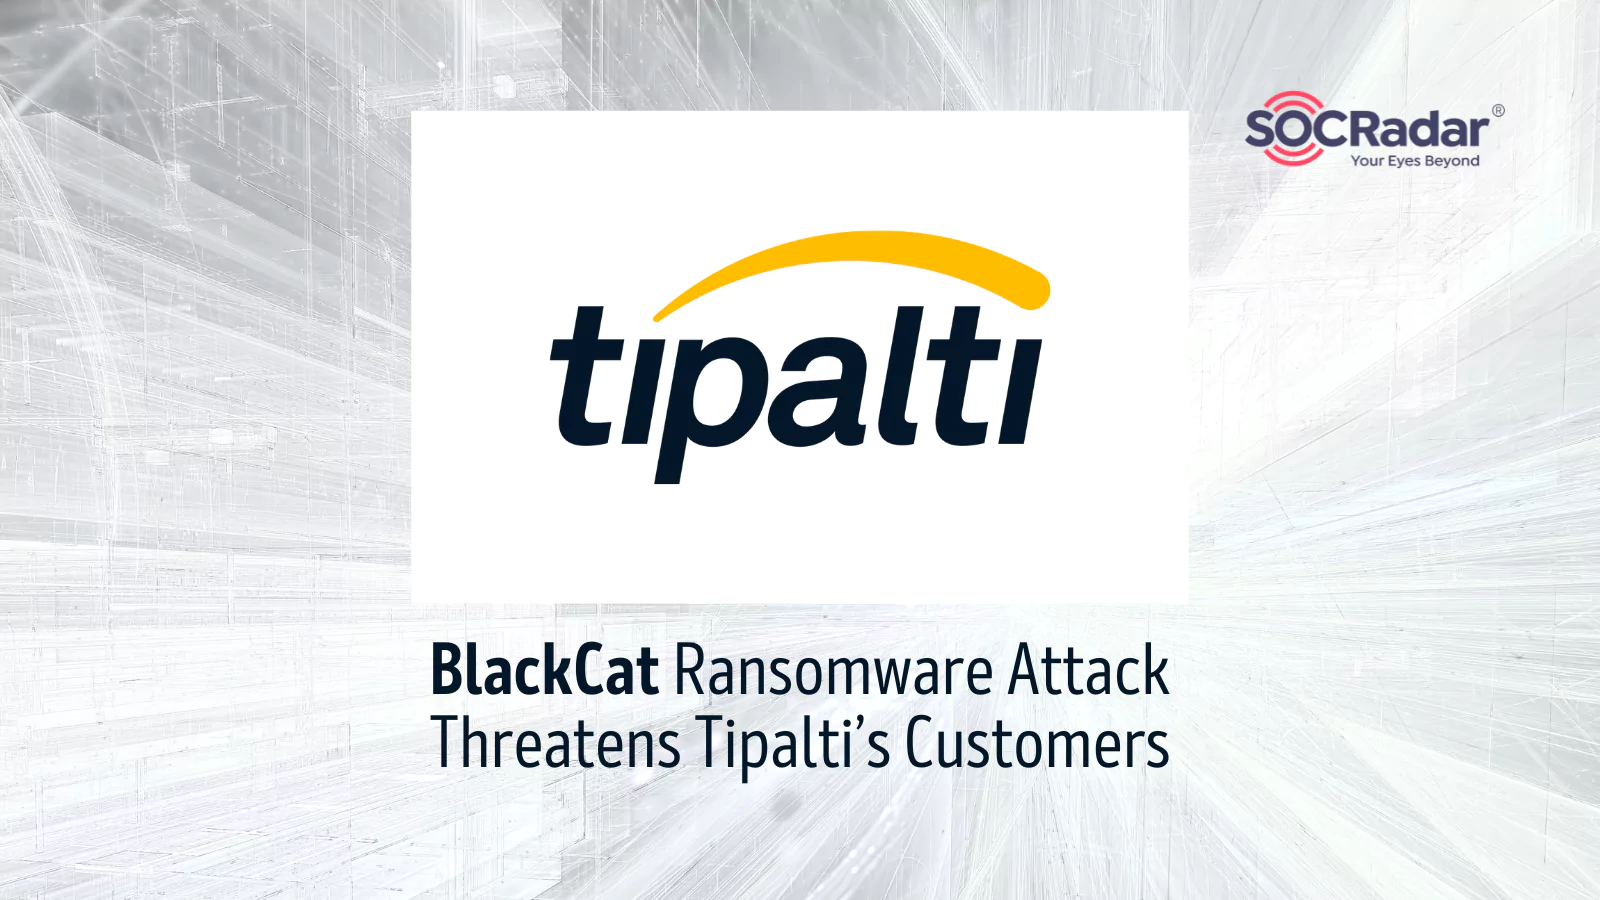 SOCRadar® Cyber Intelligence Inc. | ALPHV/BlackCat Ransomware Attack on Tipalti, Threatening Tipalti’s Customers